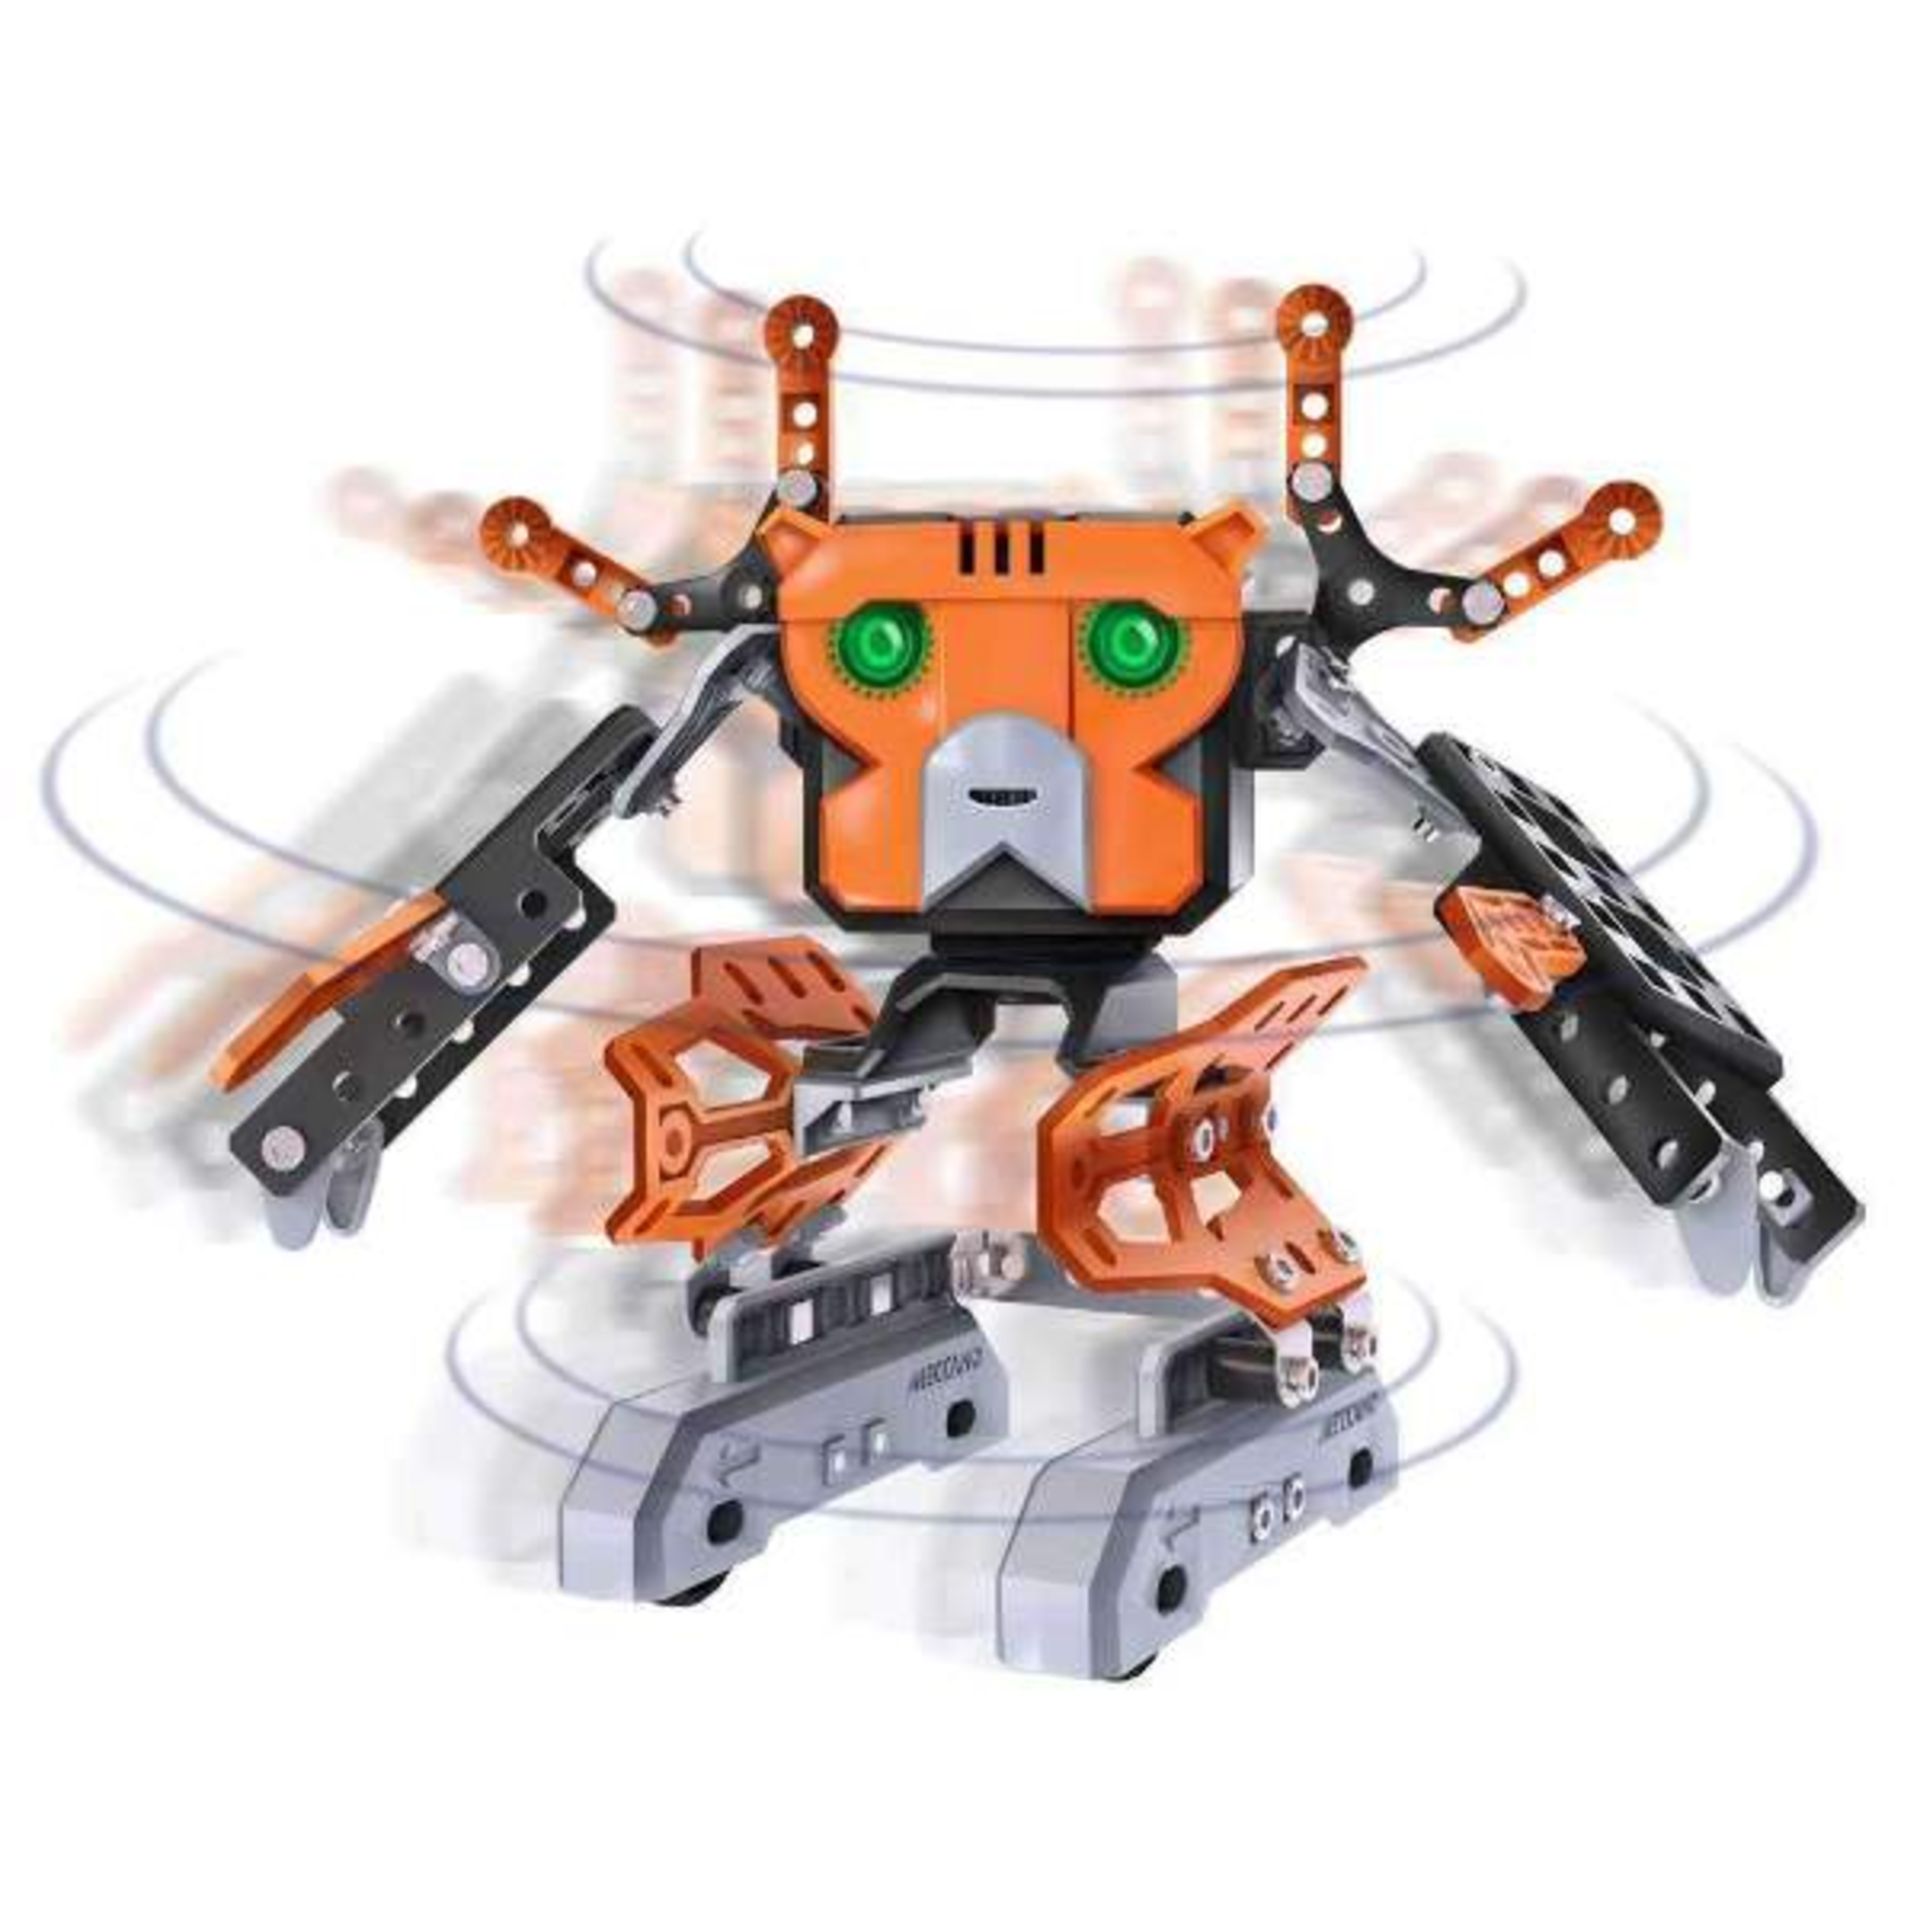 V Brand New Meccano Engineering & Robotics Micronoid Code Magna - Ebay Price £52.49 - Program - Image 3 of 3